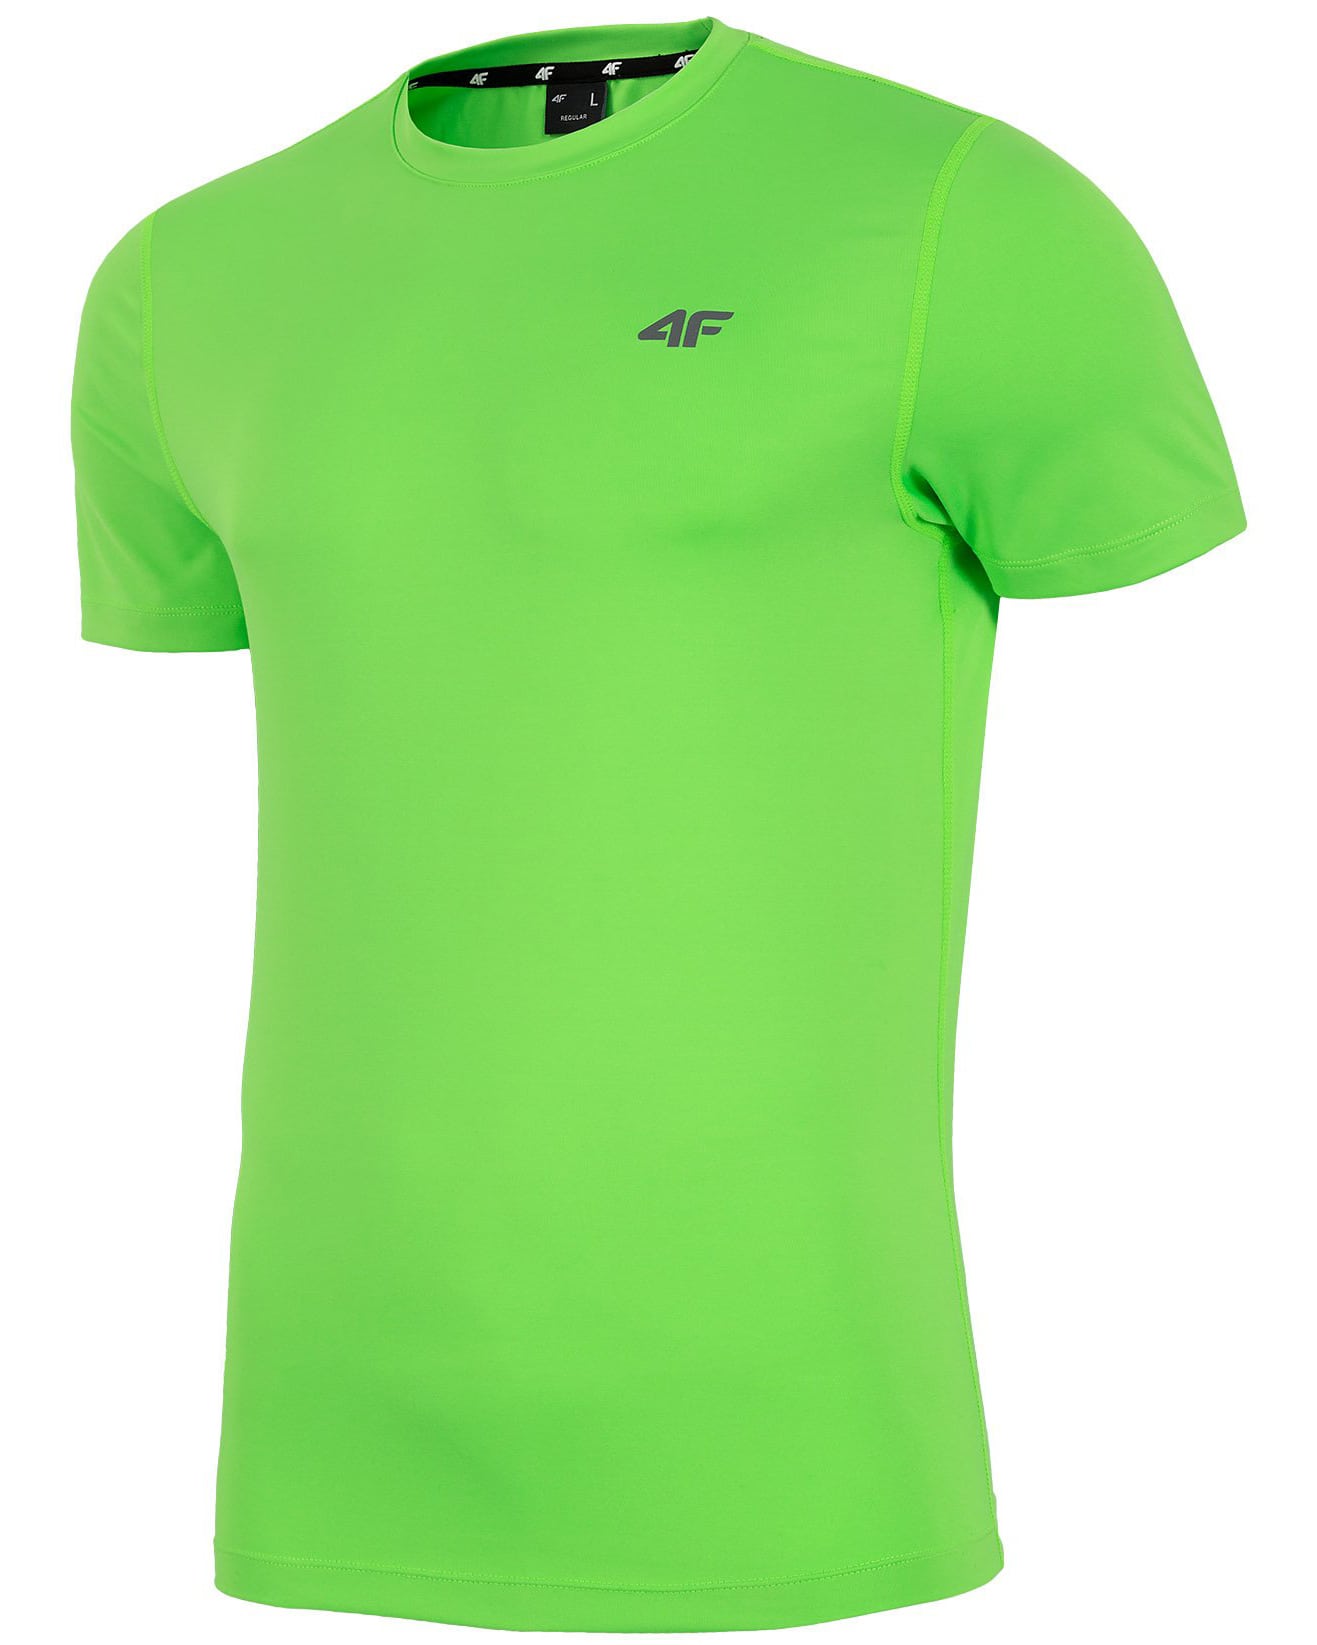 4F Man’s T-shirt - Green Neon